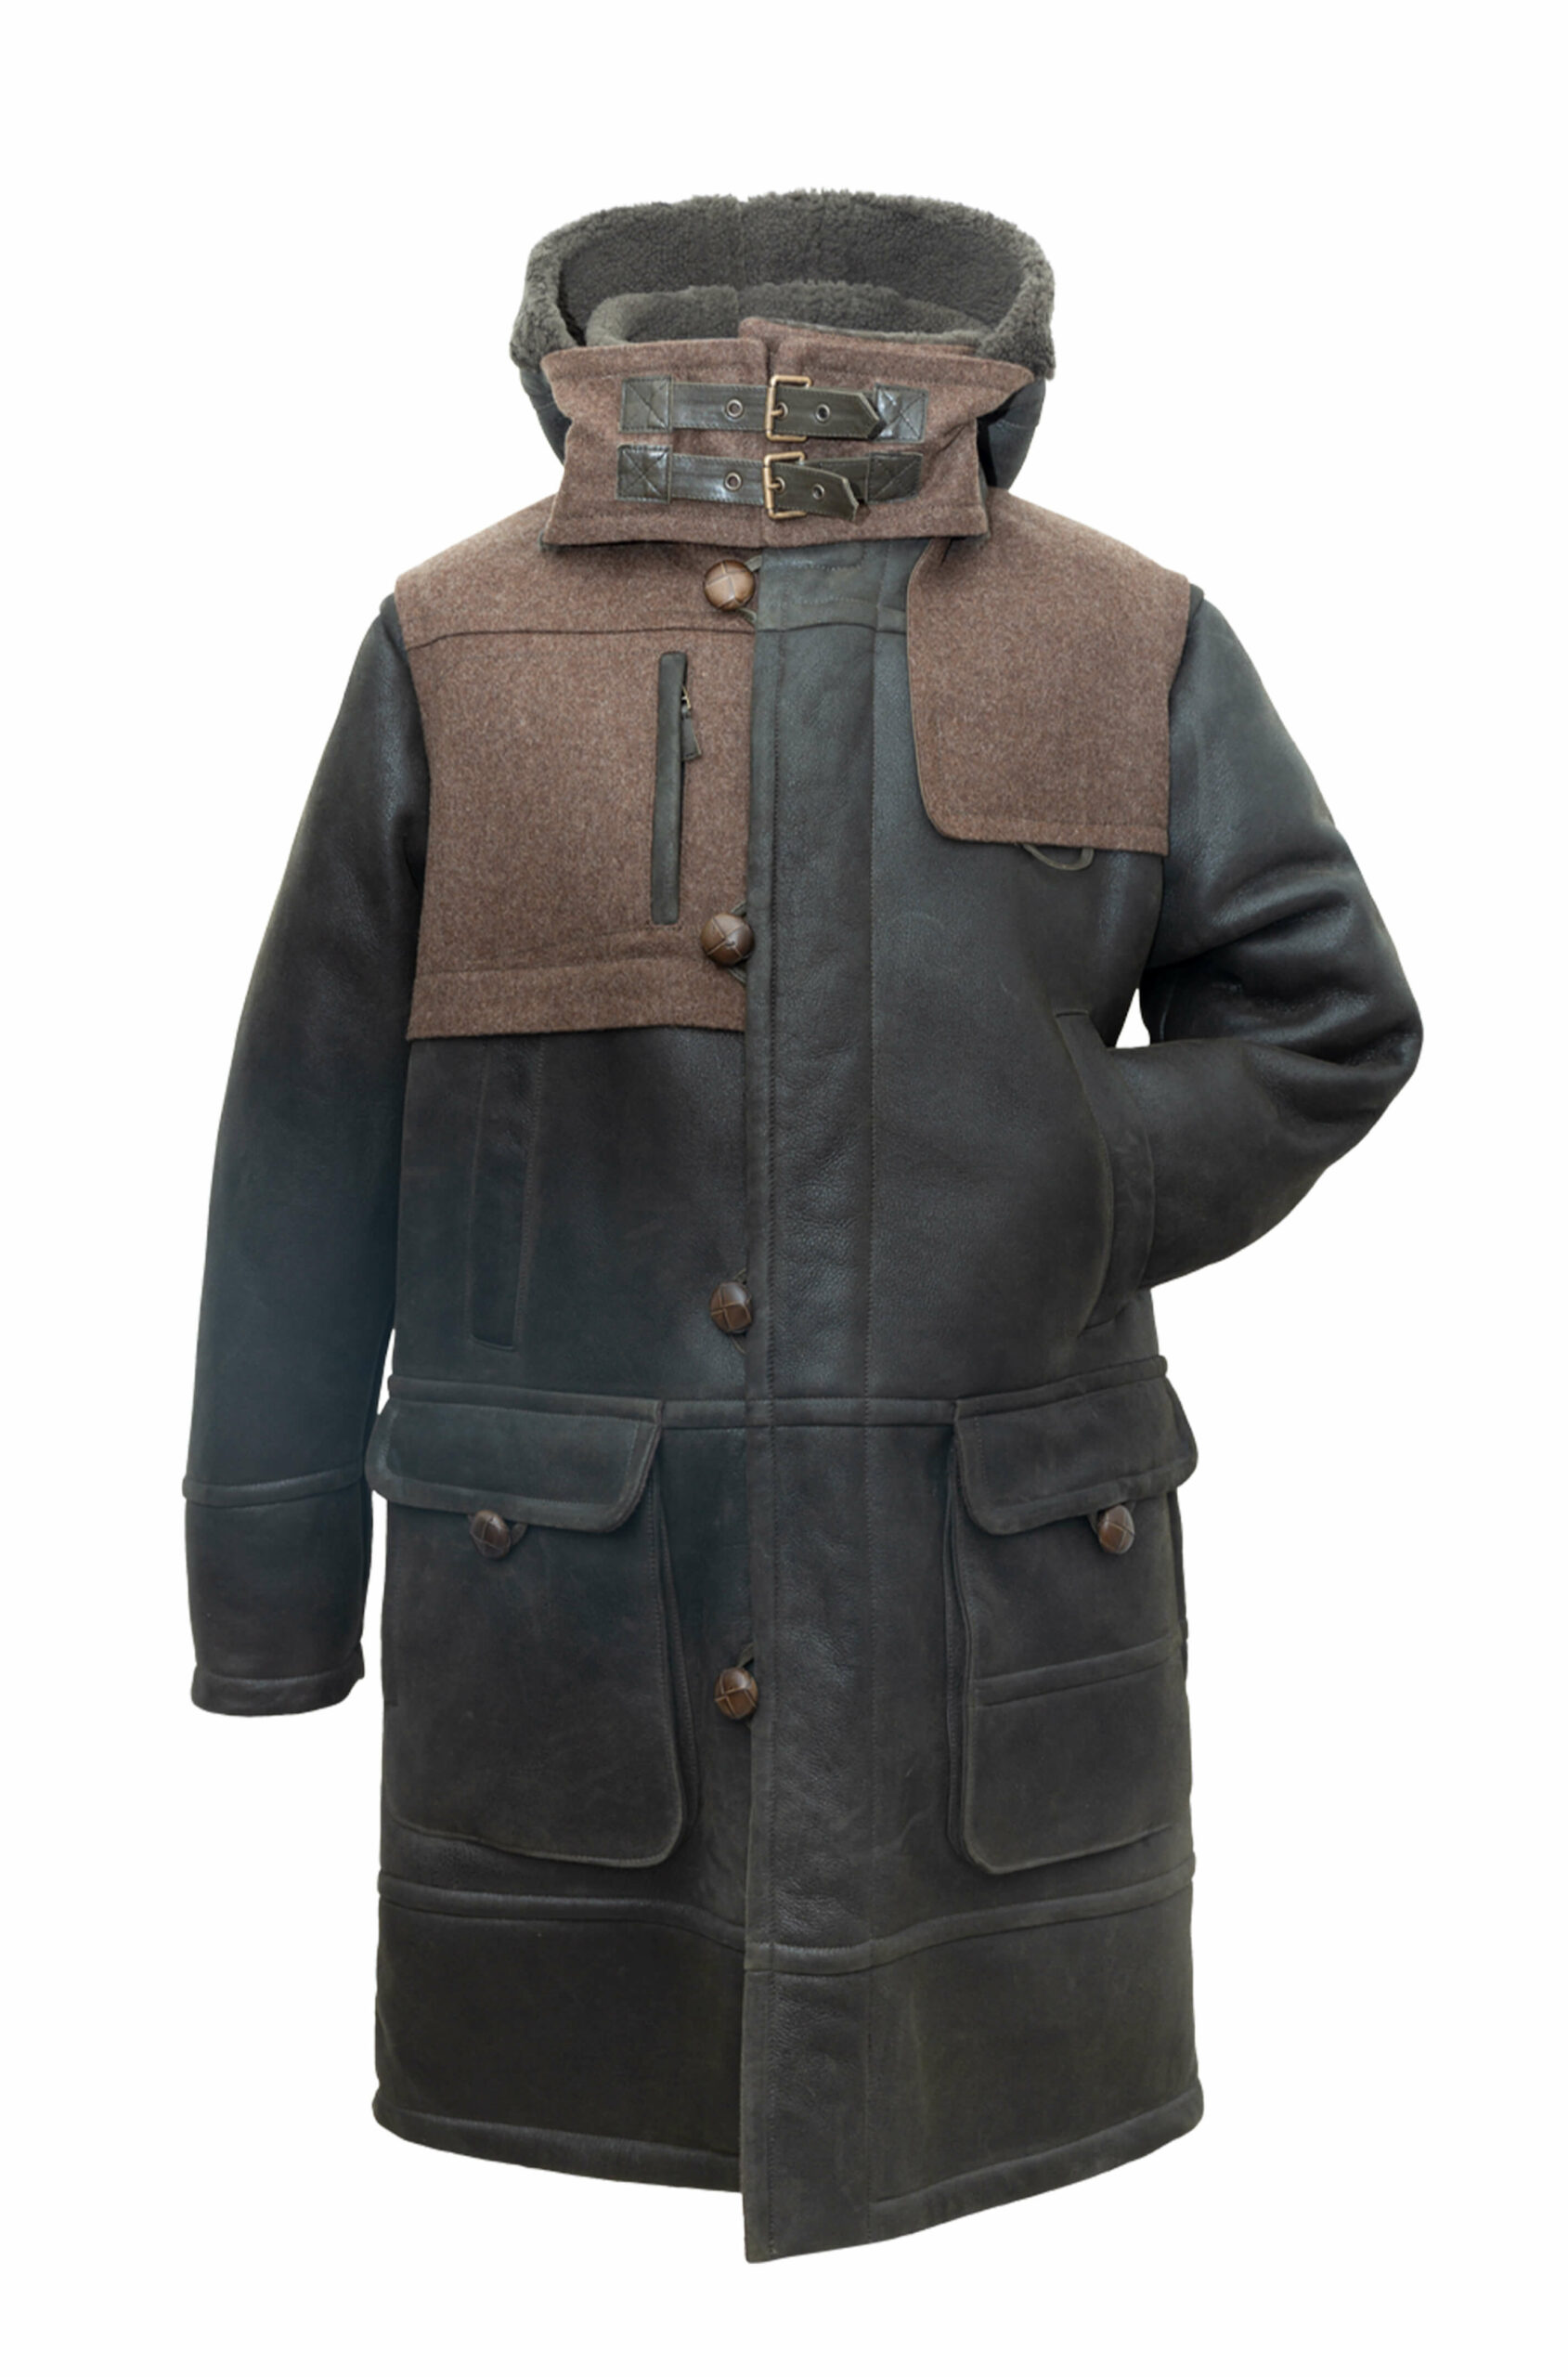 Lambskin Coat Men “Arctic Explorer”, dusty green